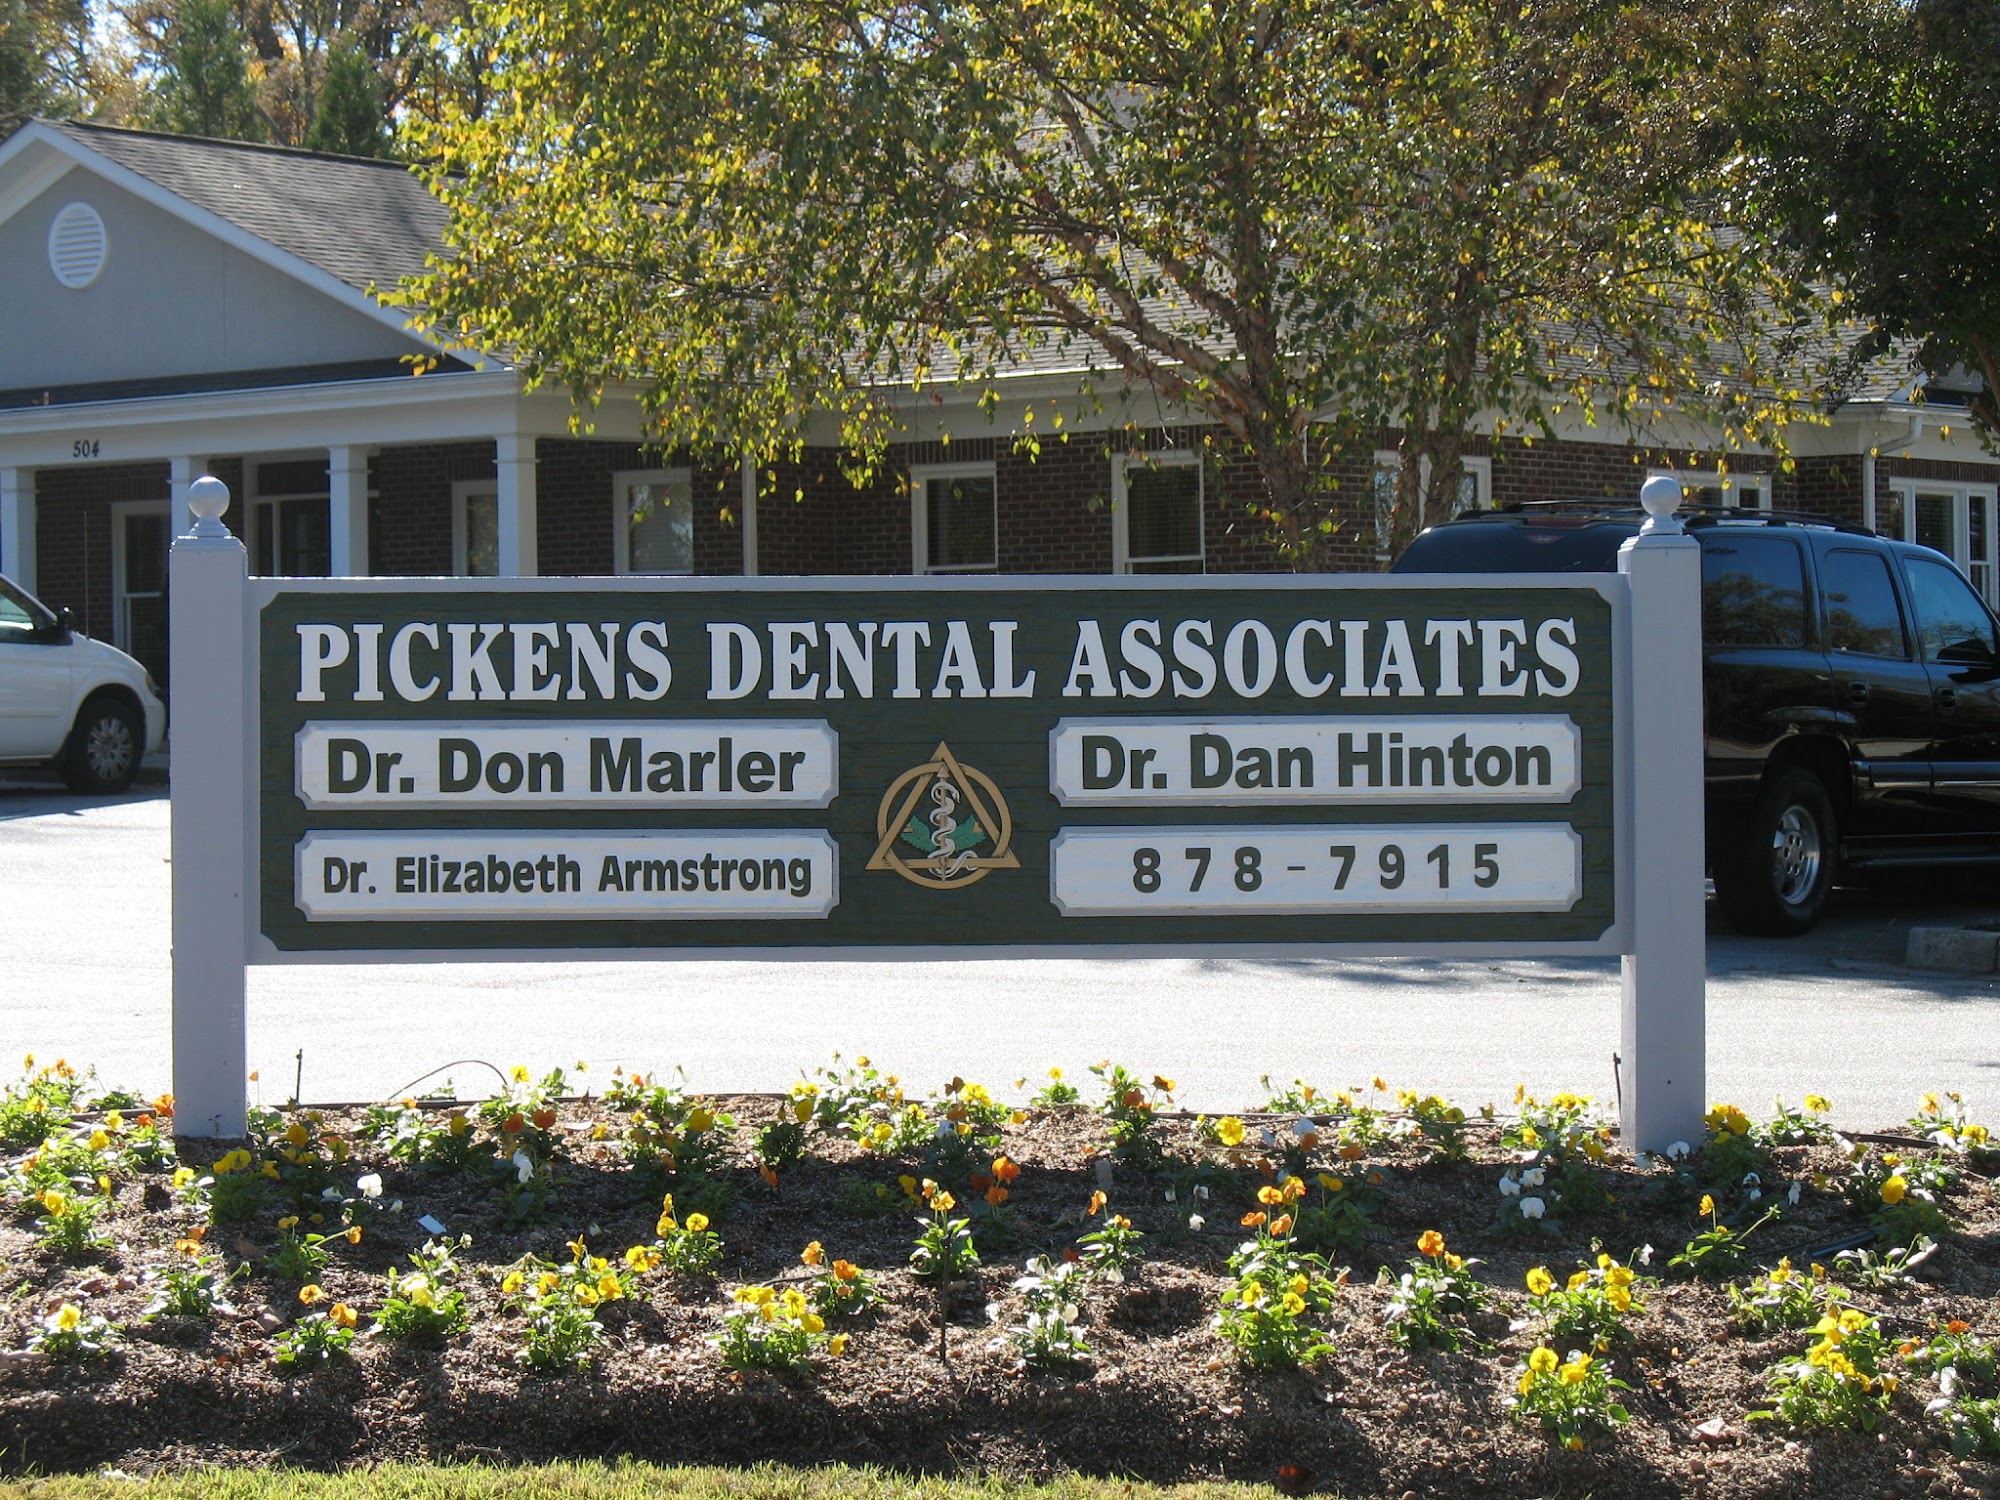 Pickens Dental Associates: Don Marler, DMD 504 Hampton Ave, Pickens South Carolina 29671